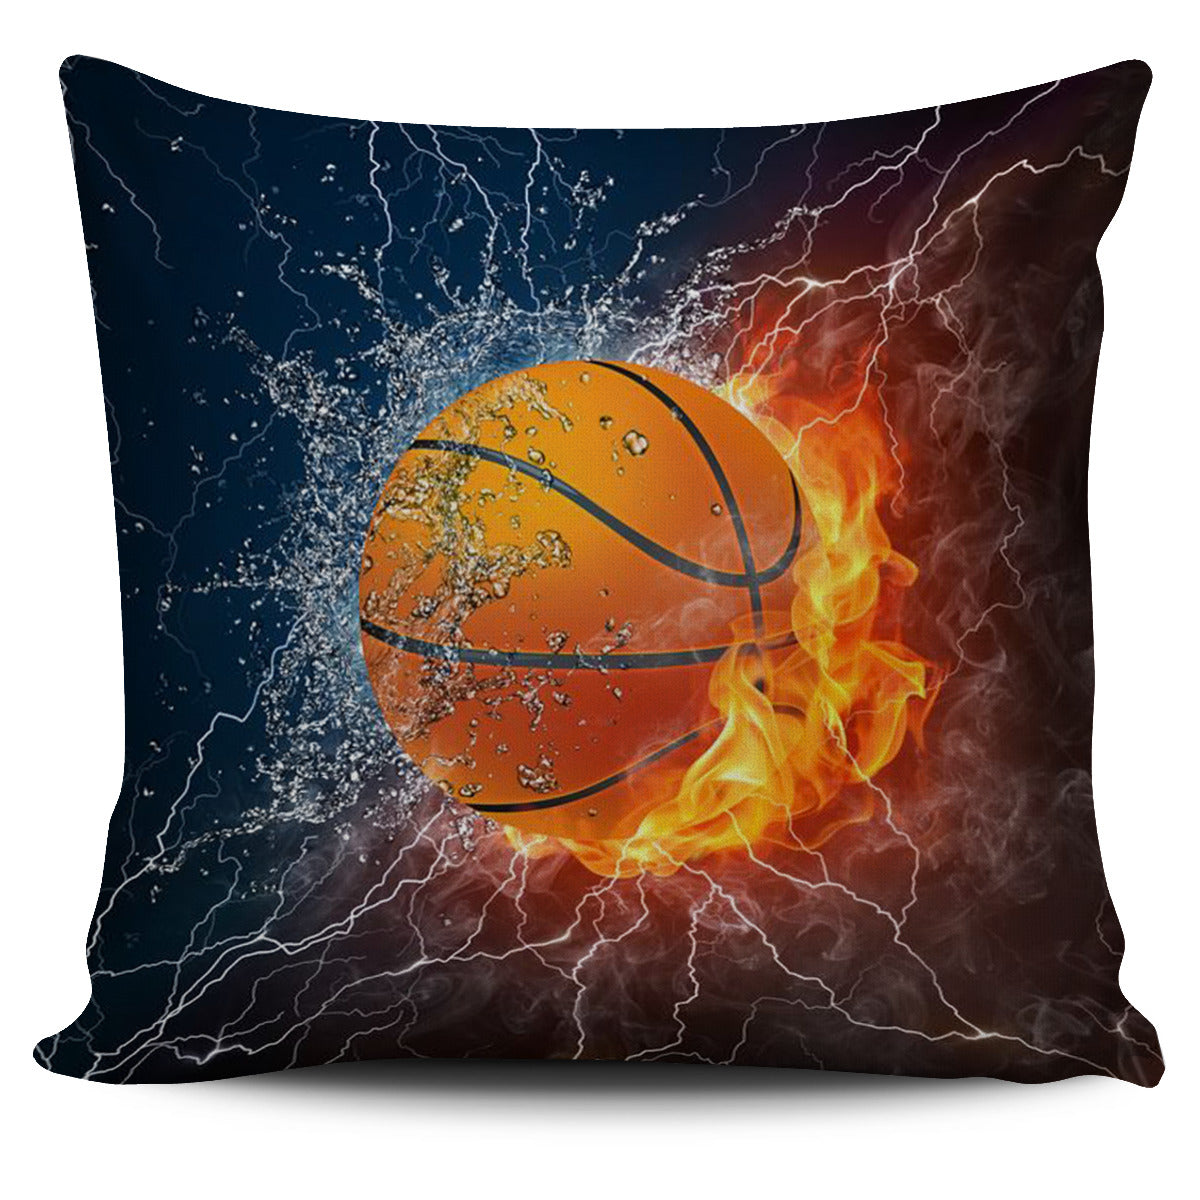 Basketball Pillow Cover